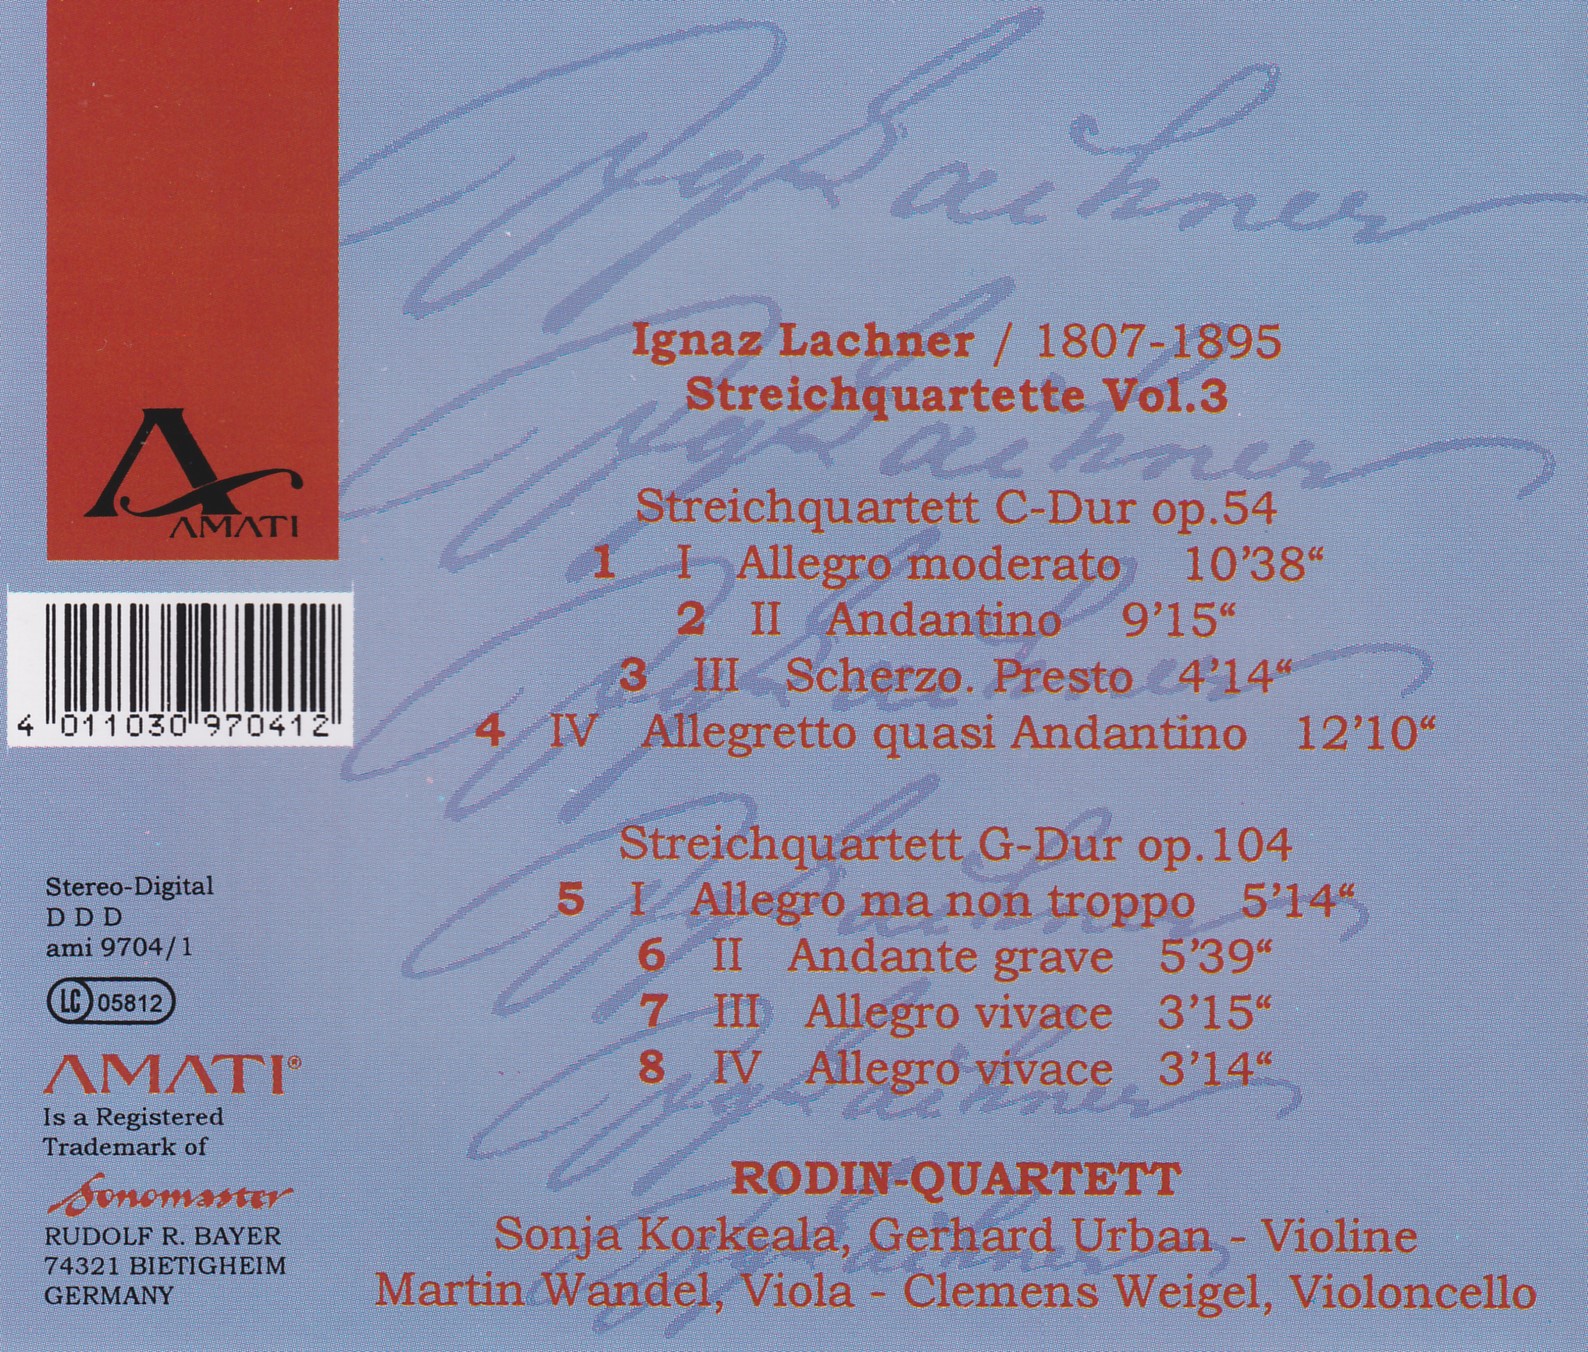 Ignaz Lachner - Streichquartette Vol.3